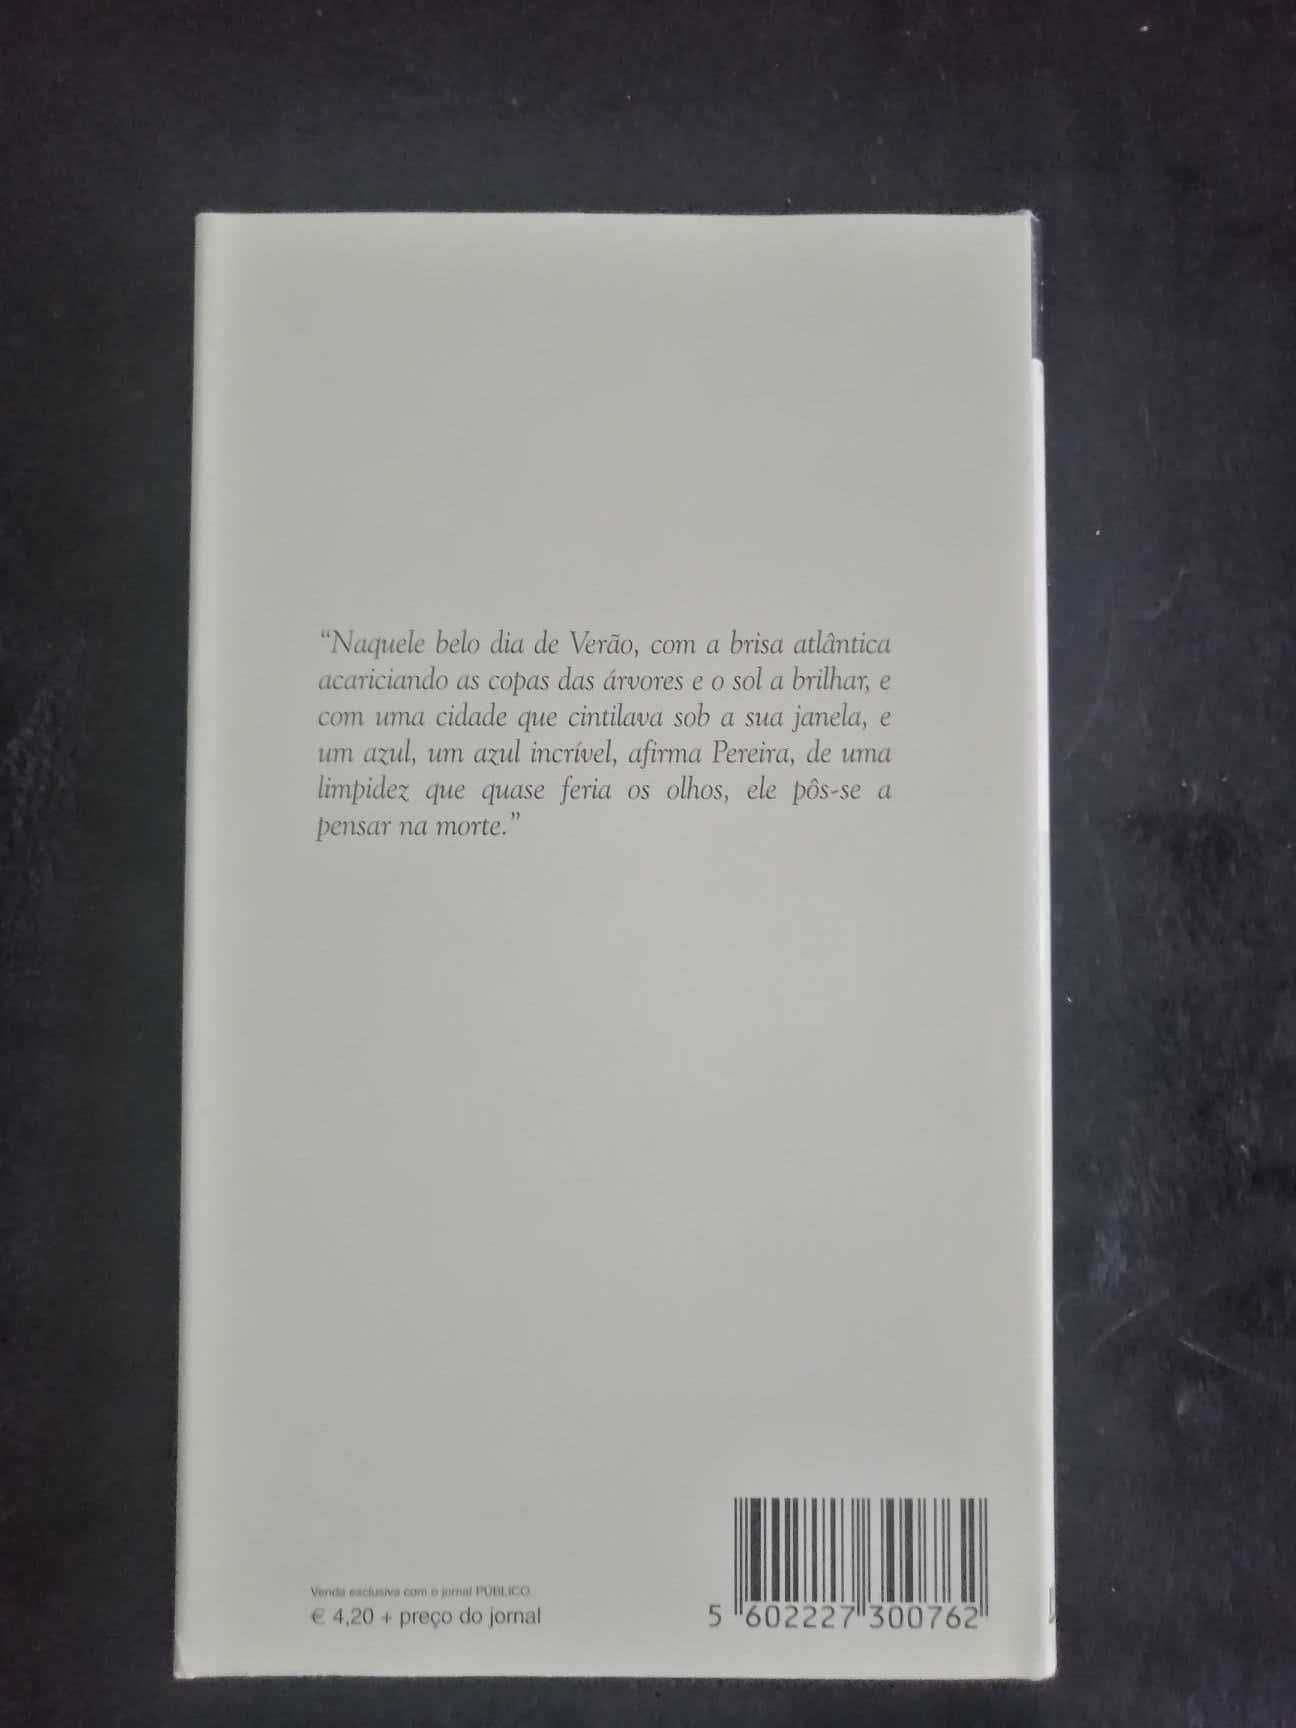 Livro "Afirma Pereira" de Antonio Tabucchi - Novo